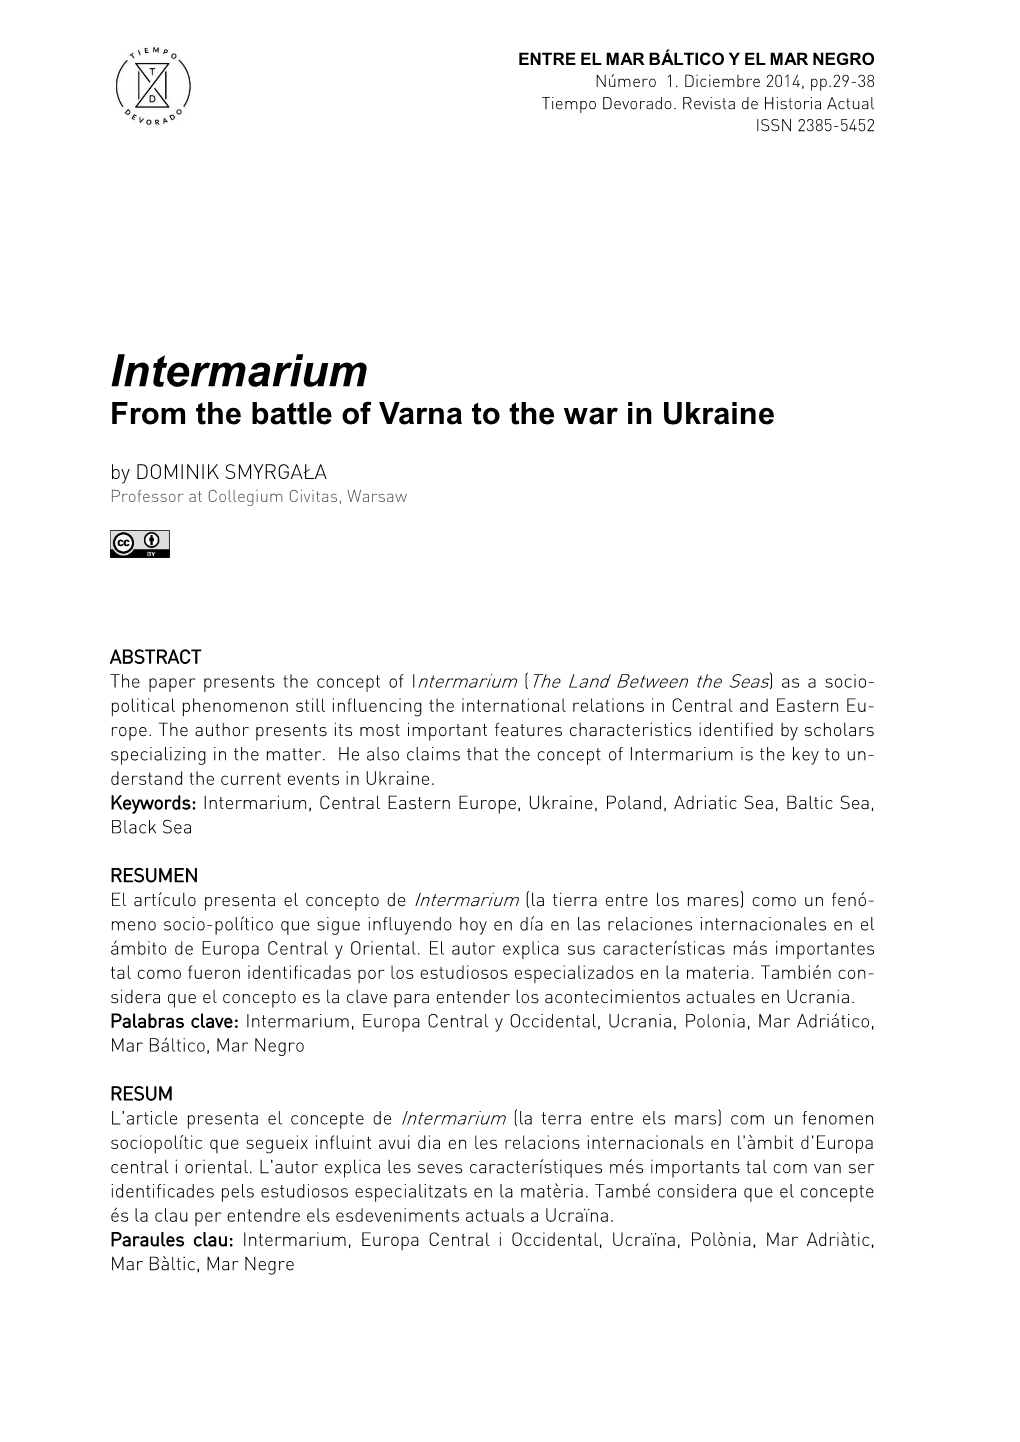 Intermarium from the Battle of Varna to the War in Ukraine by DOMINIK SMYRGAŁA Professor at Collegium Civitas, Warsaw